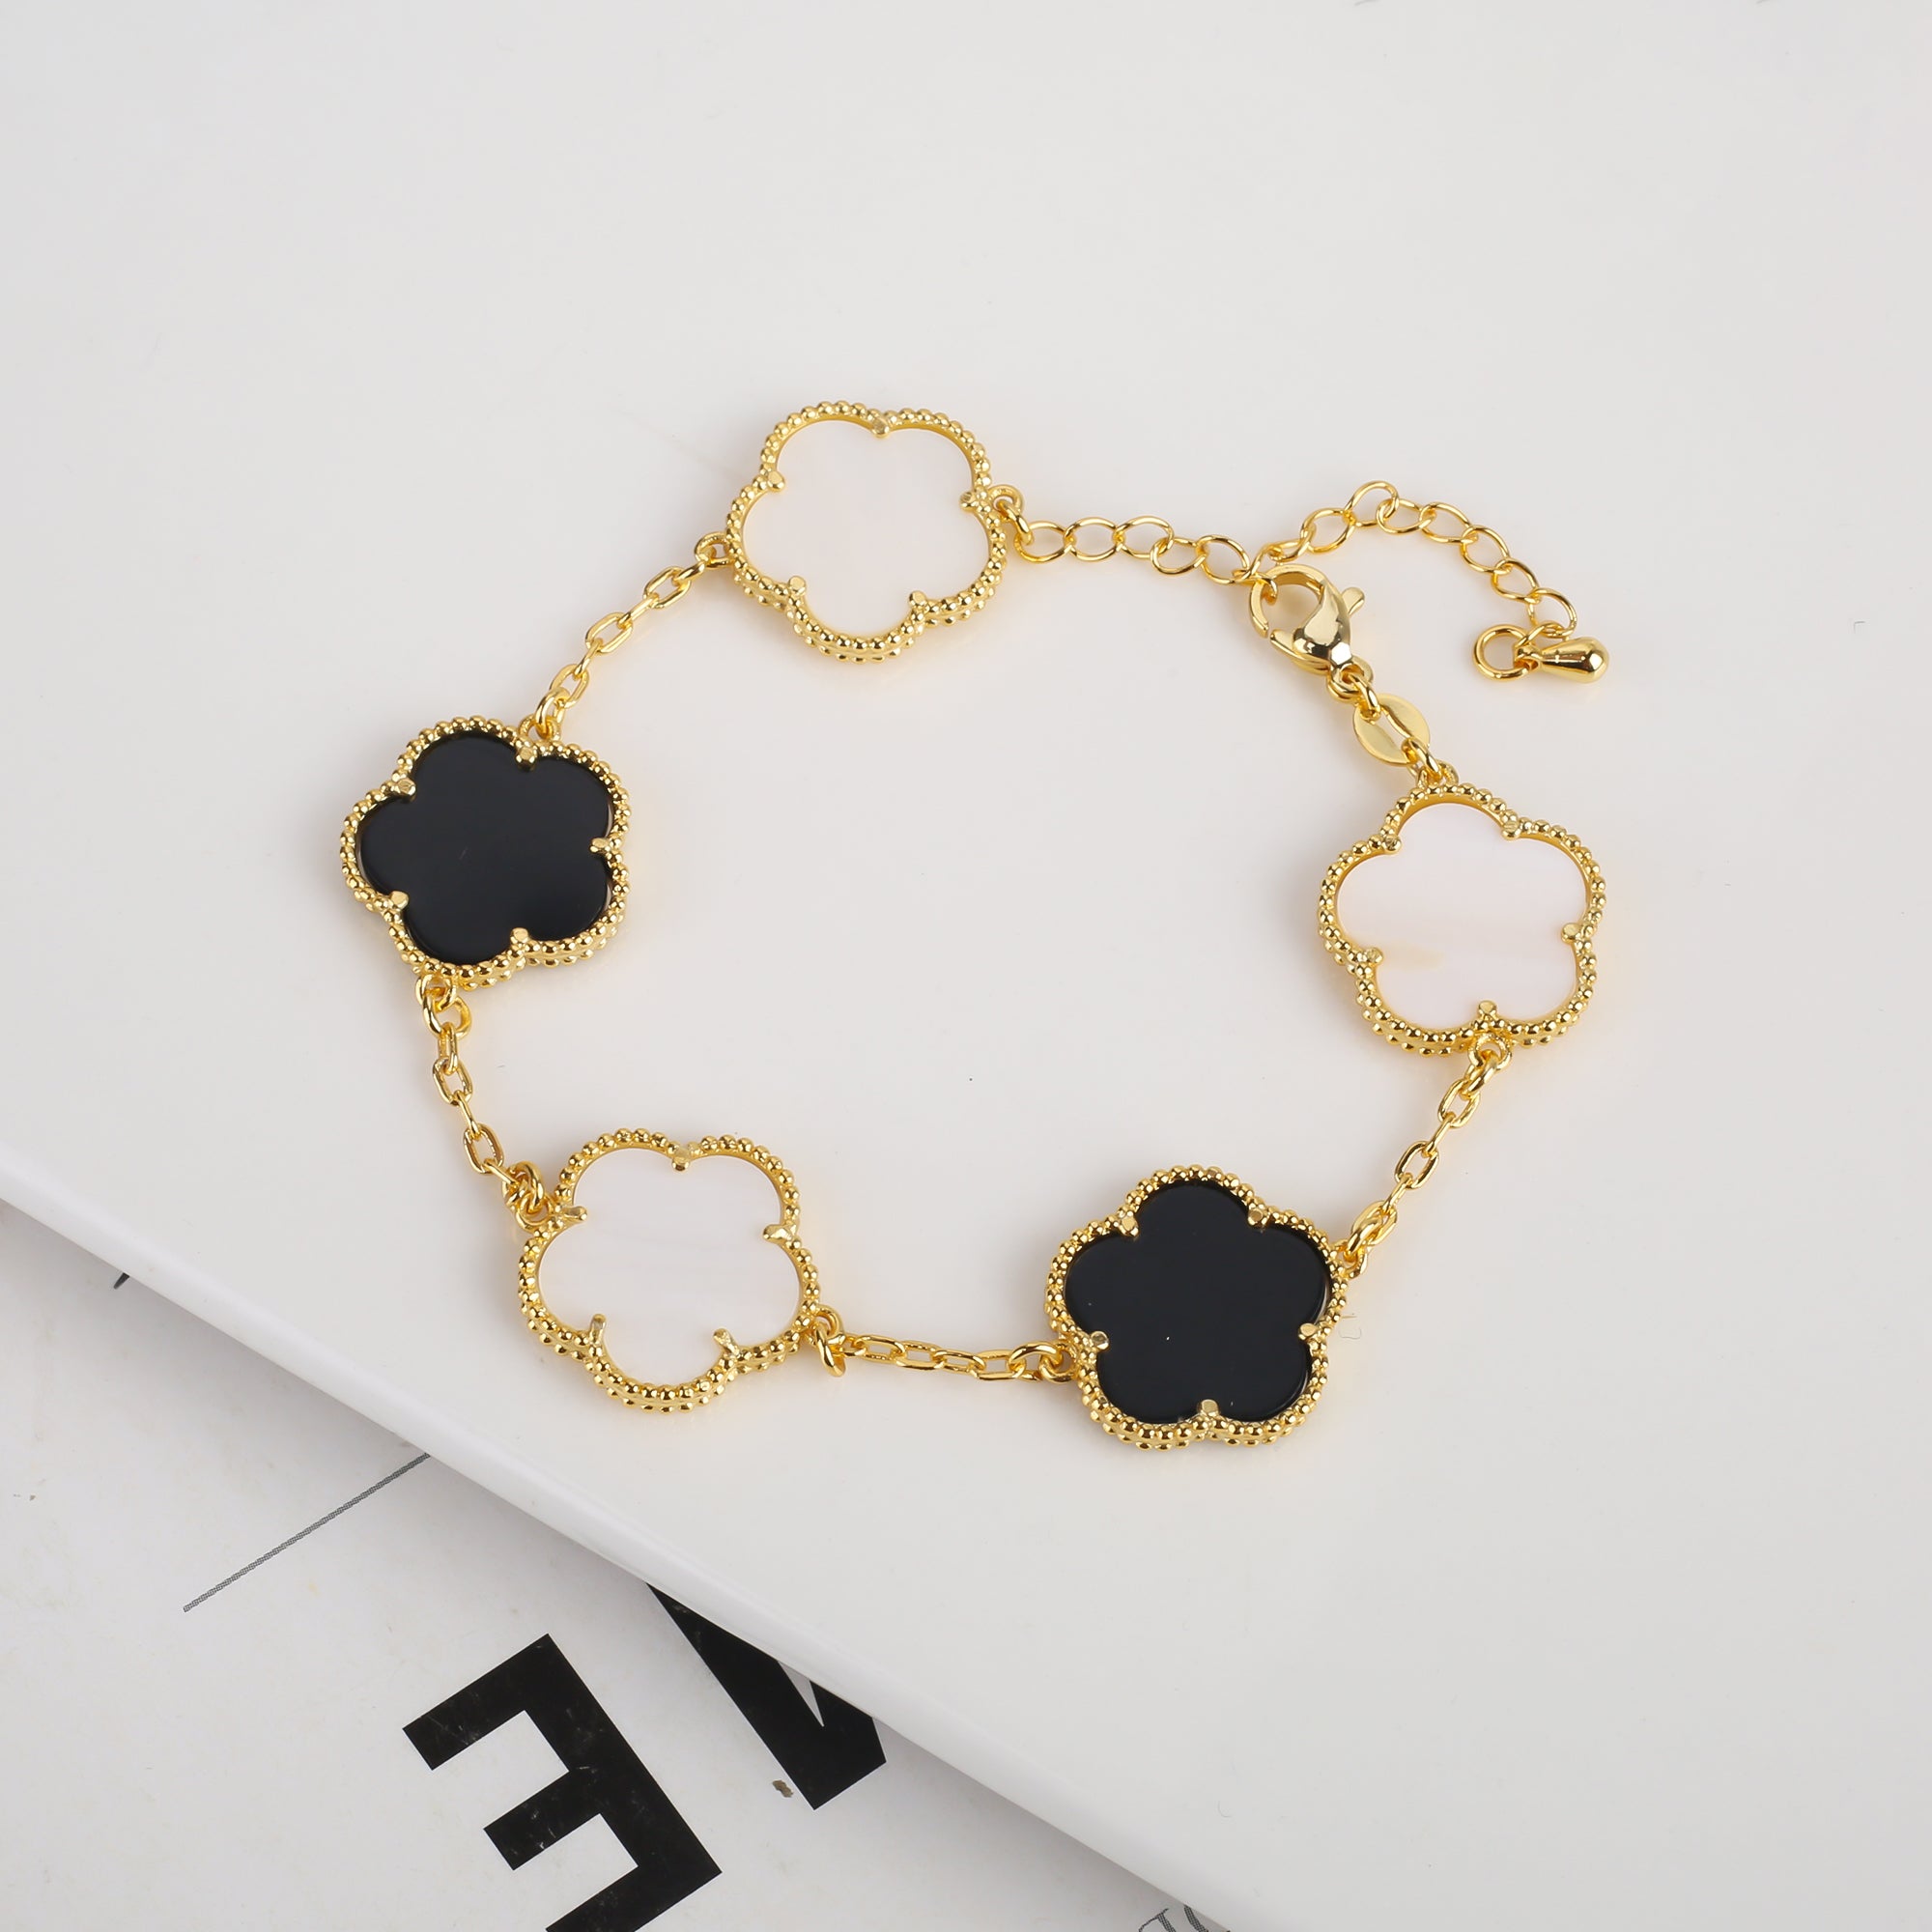 Vintage Clover Flower Pendant Gold Chain Bracelet